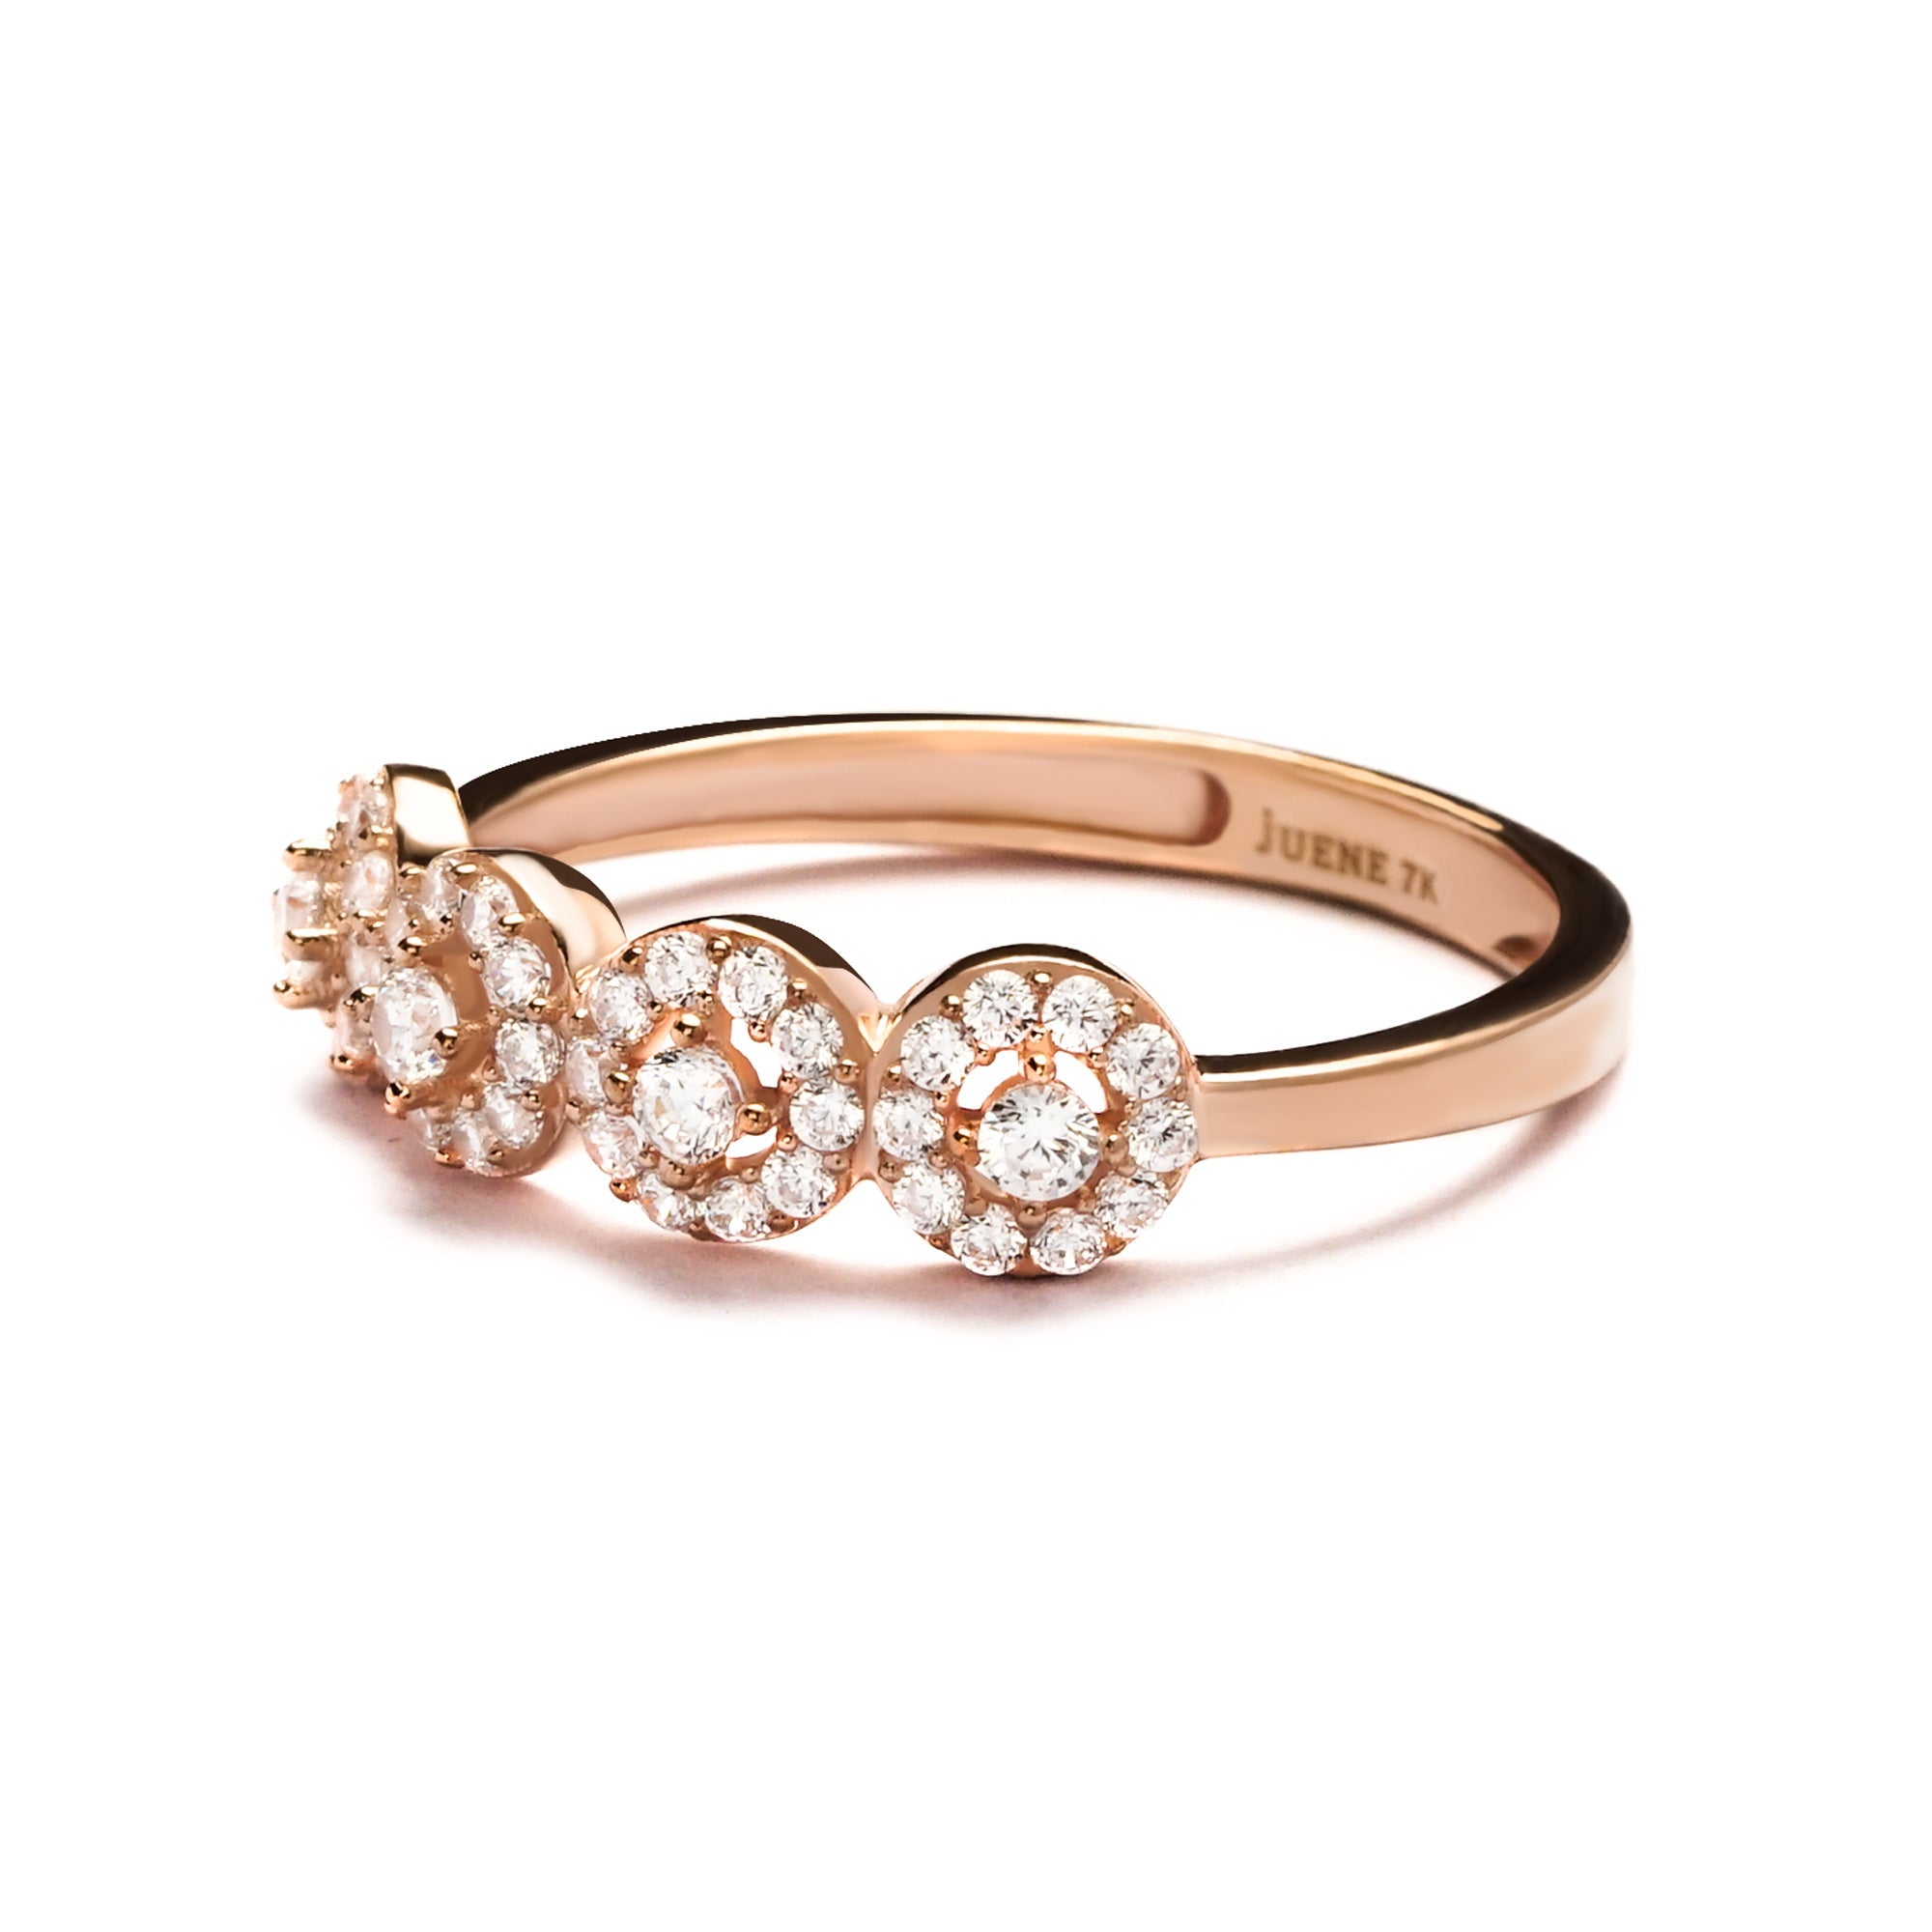 Cassandra Gold Ring - Radiance - Juene Jewelry